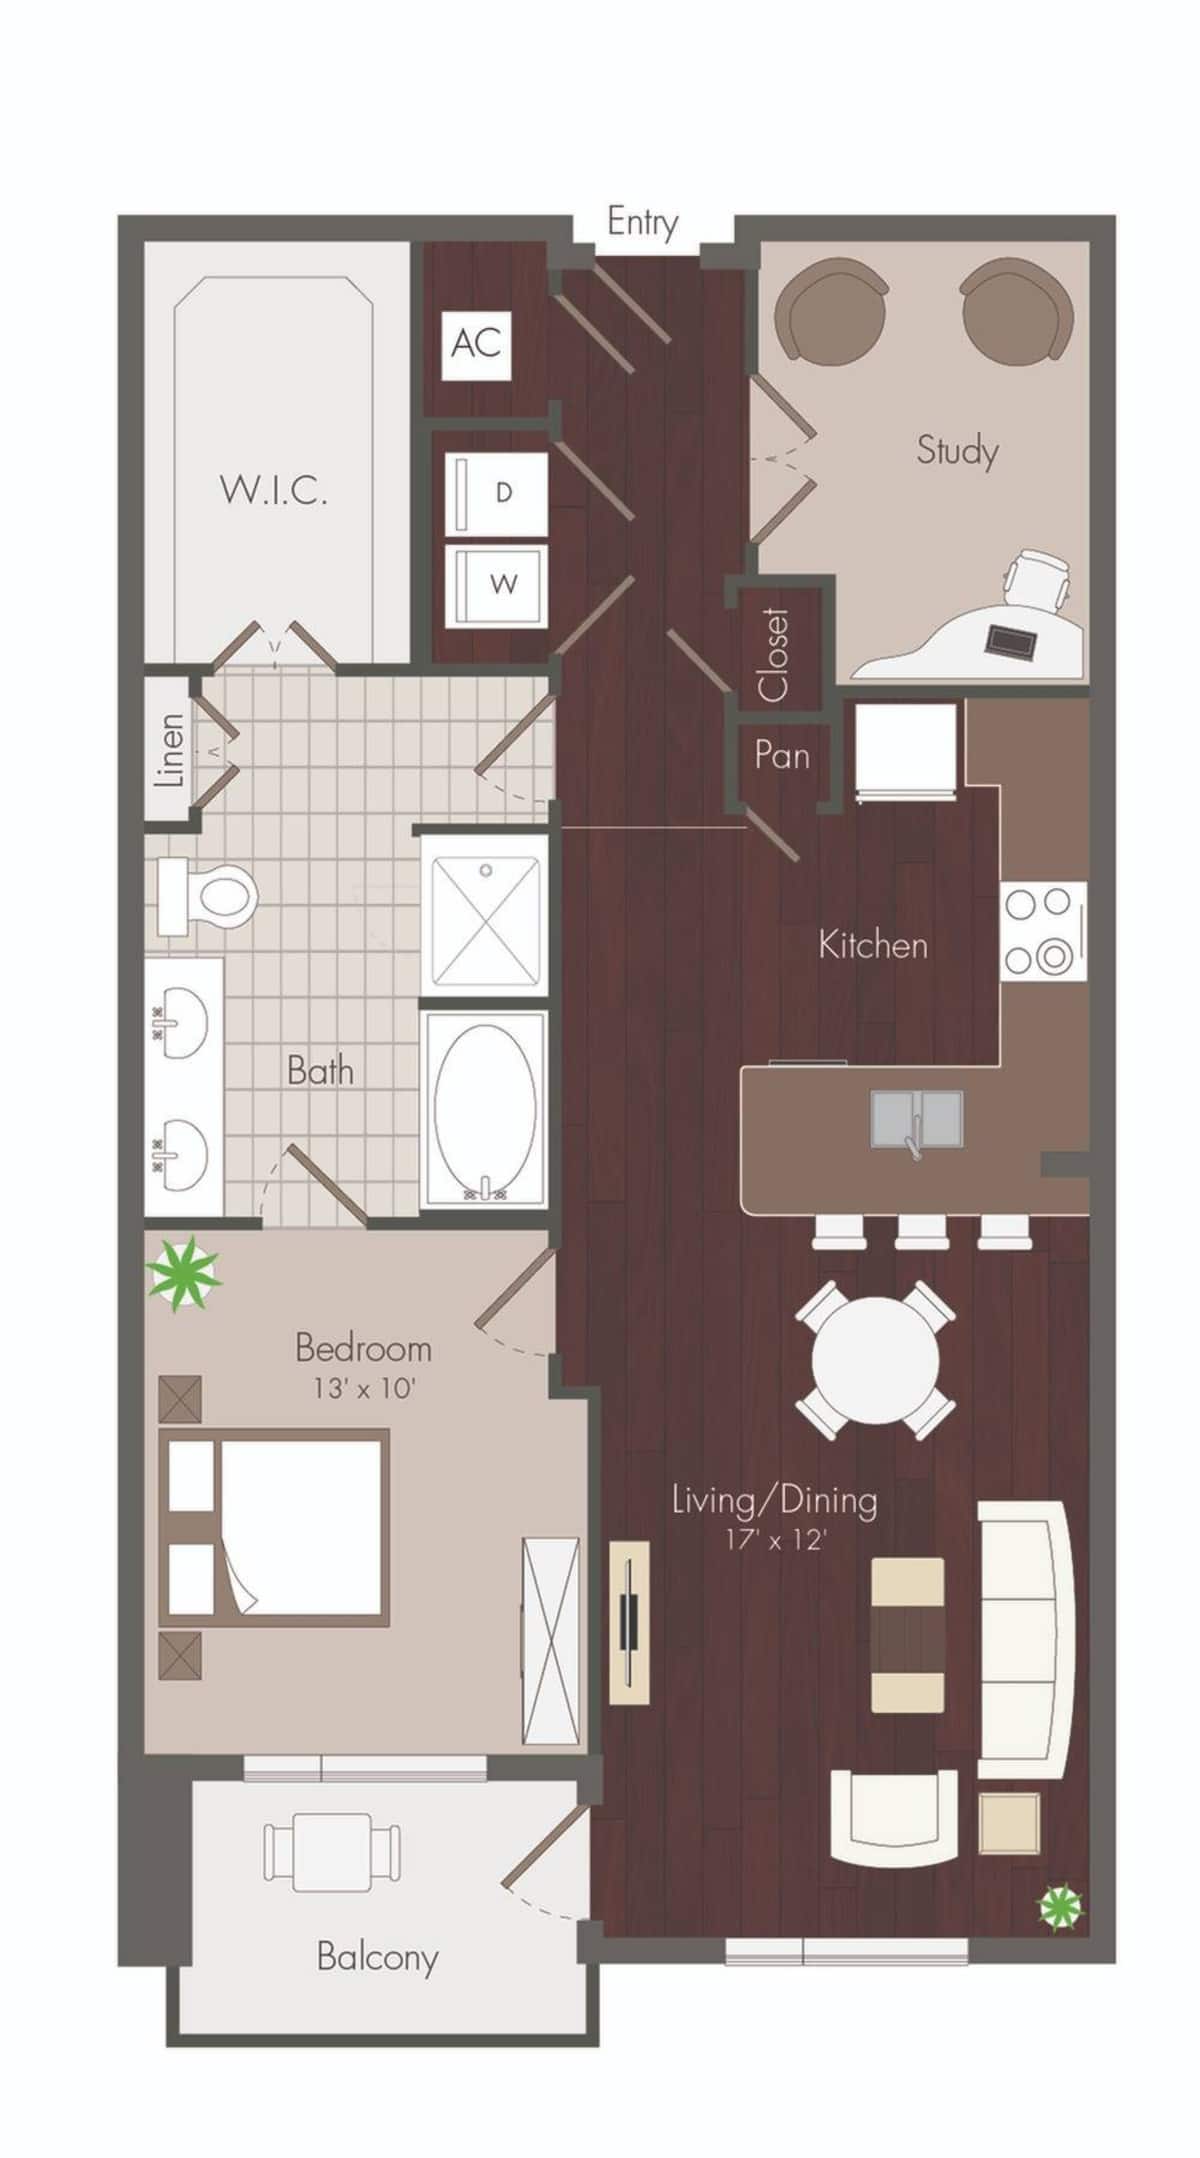 Floorplan diagram for Knox, showing 1 bedroom